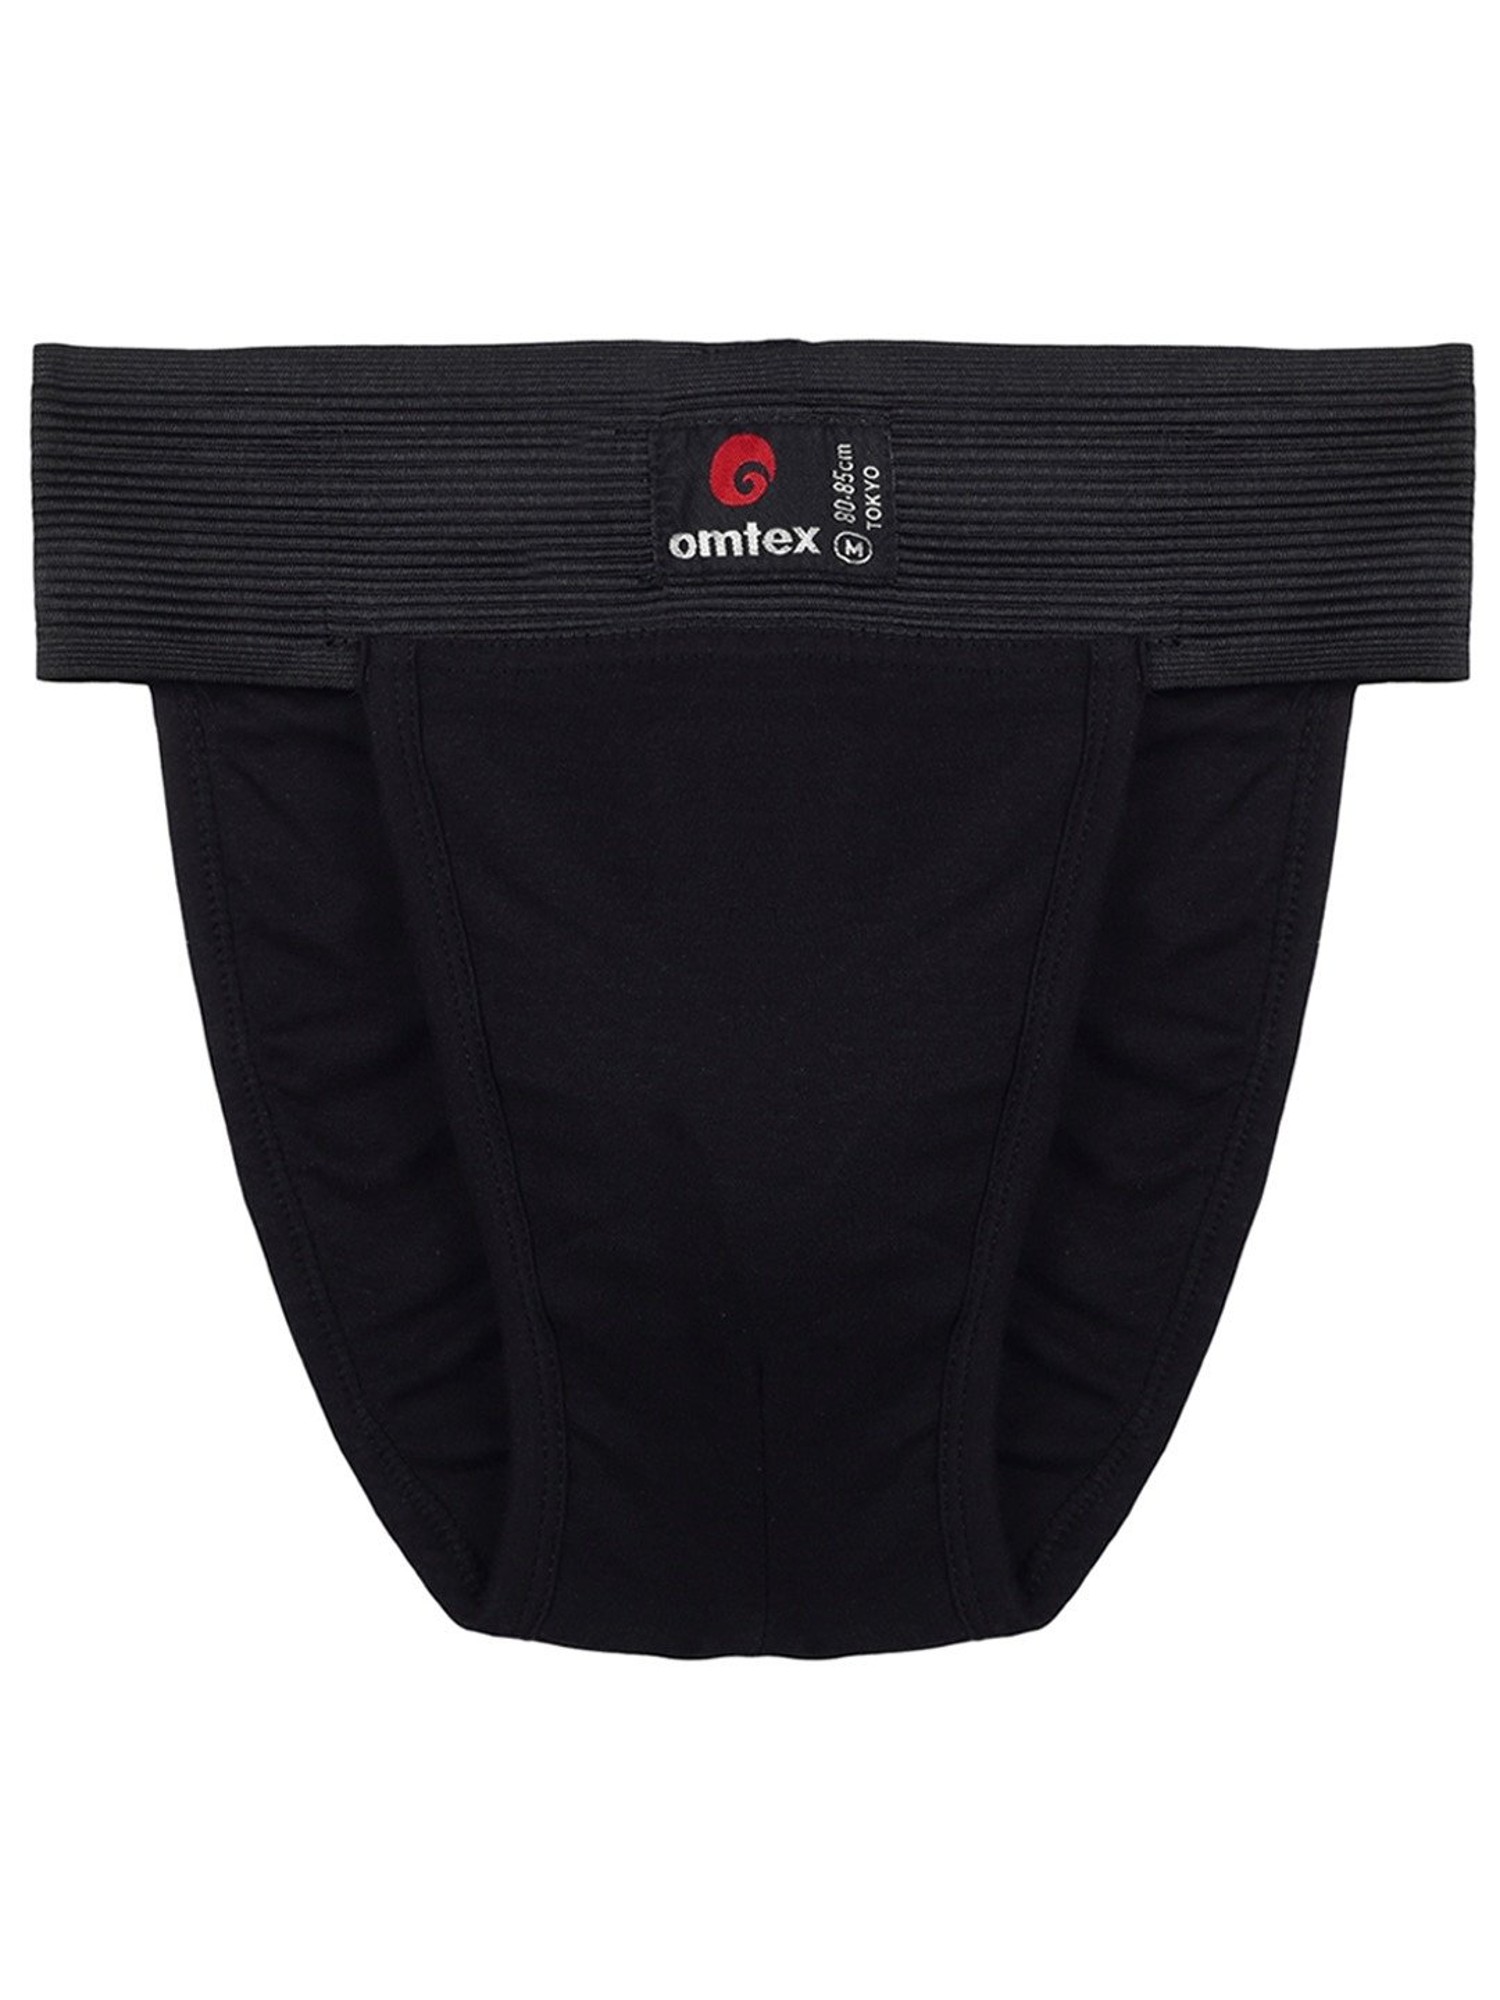 Buy Omtex Mens Athletic Gym Supporters Jockstraps Black (Pack of 2) online